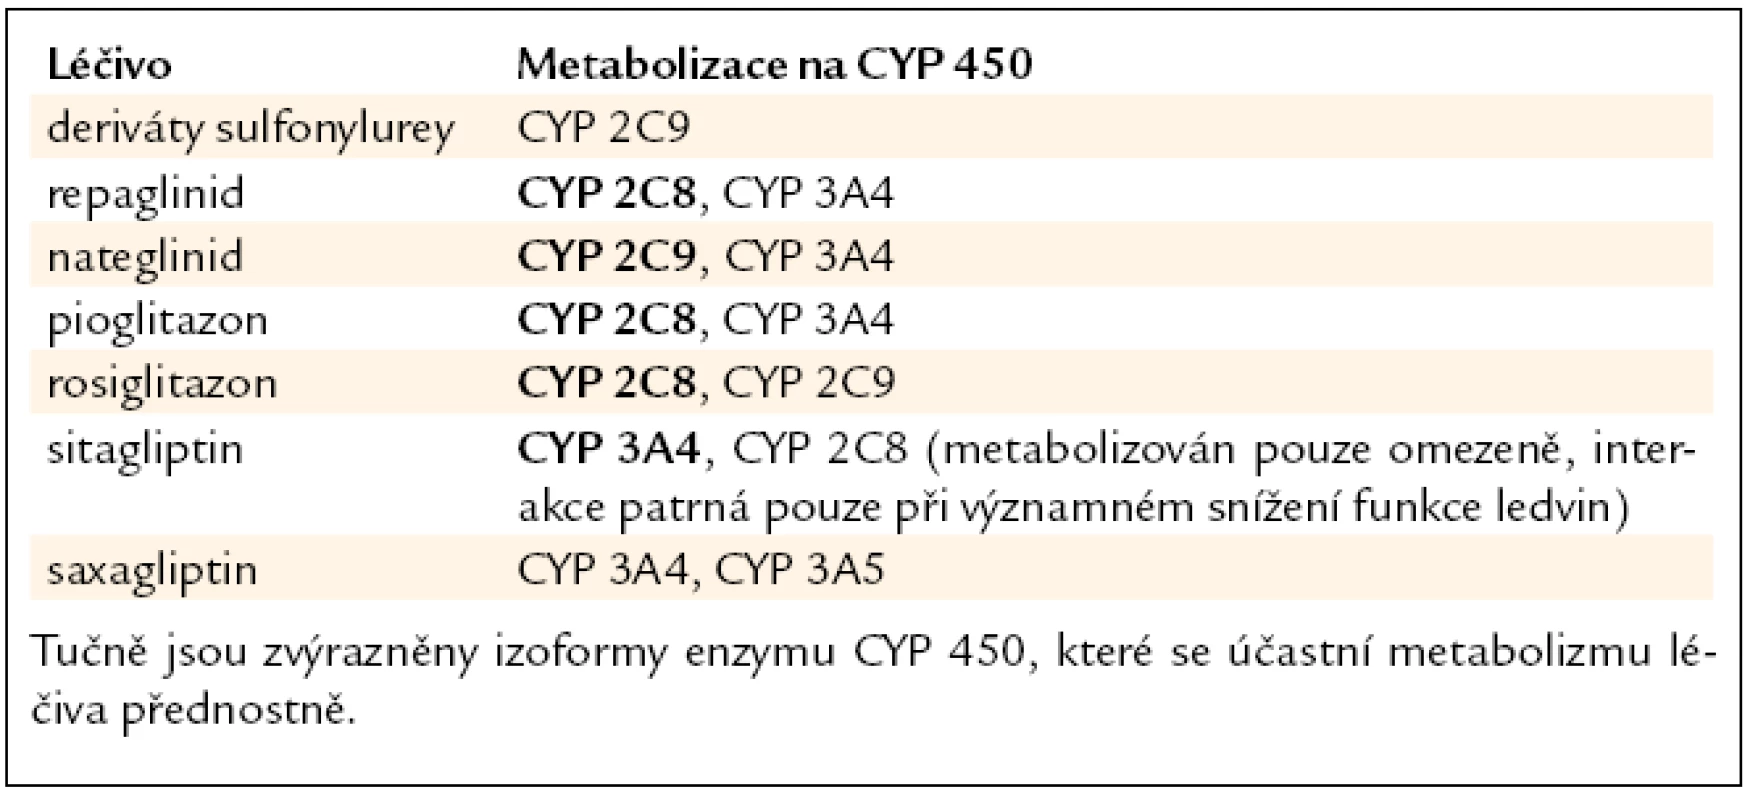 Antidiabetika metabolizovaná systémem CYP 450 [9,15,16,19–21].